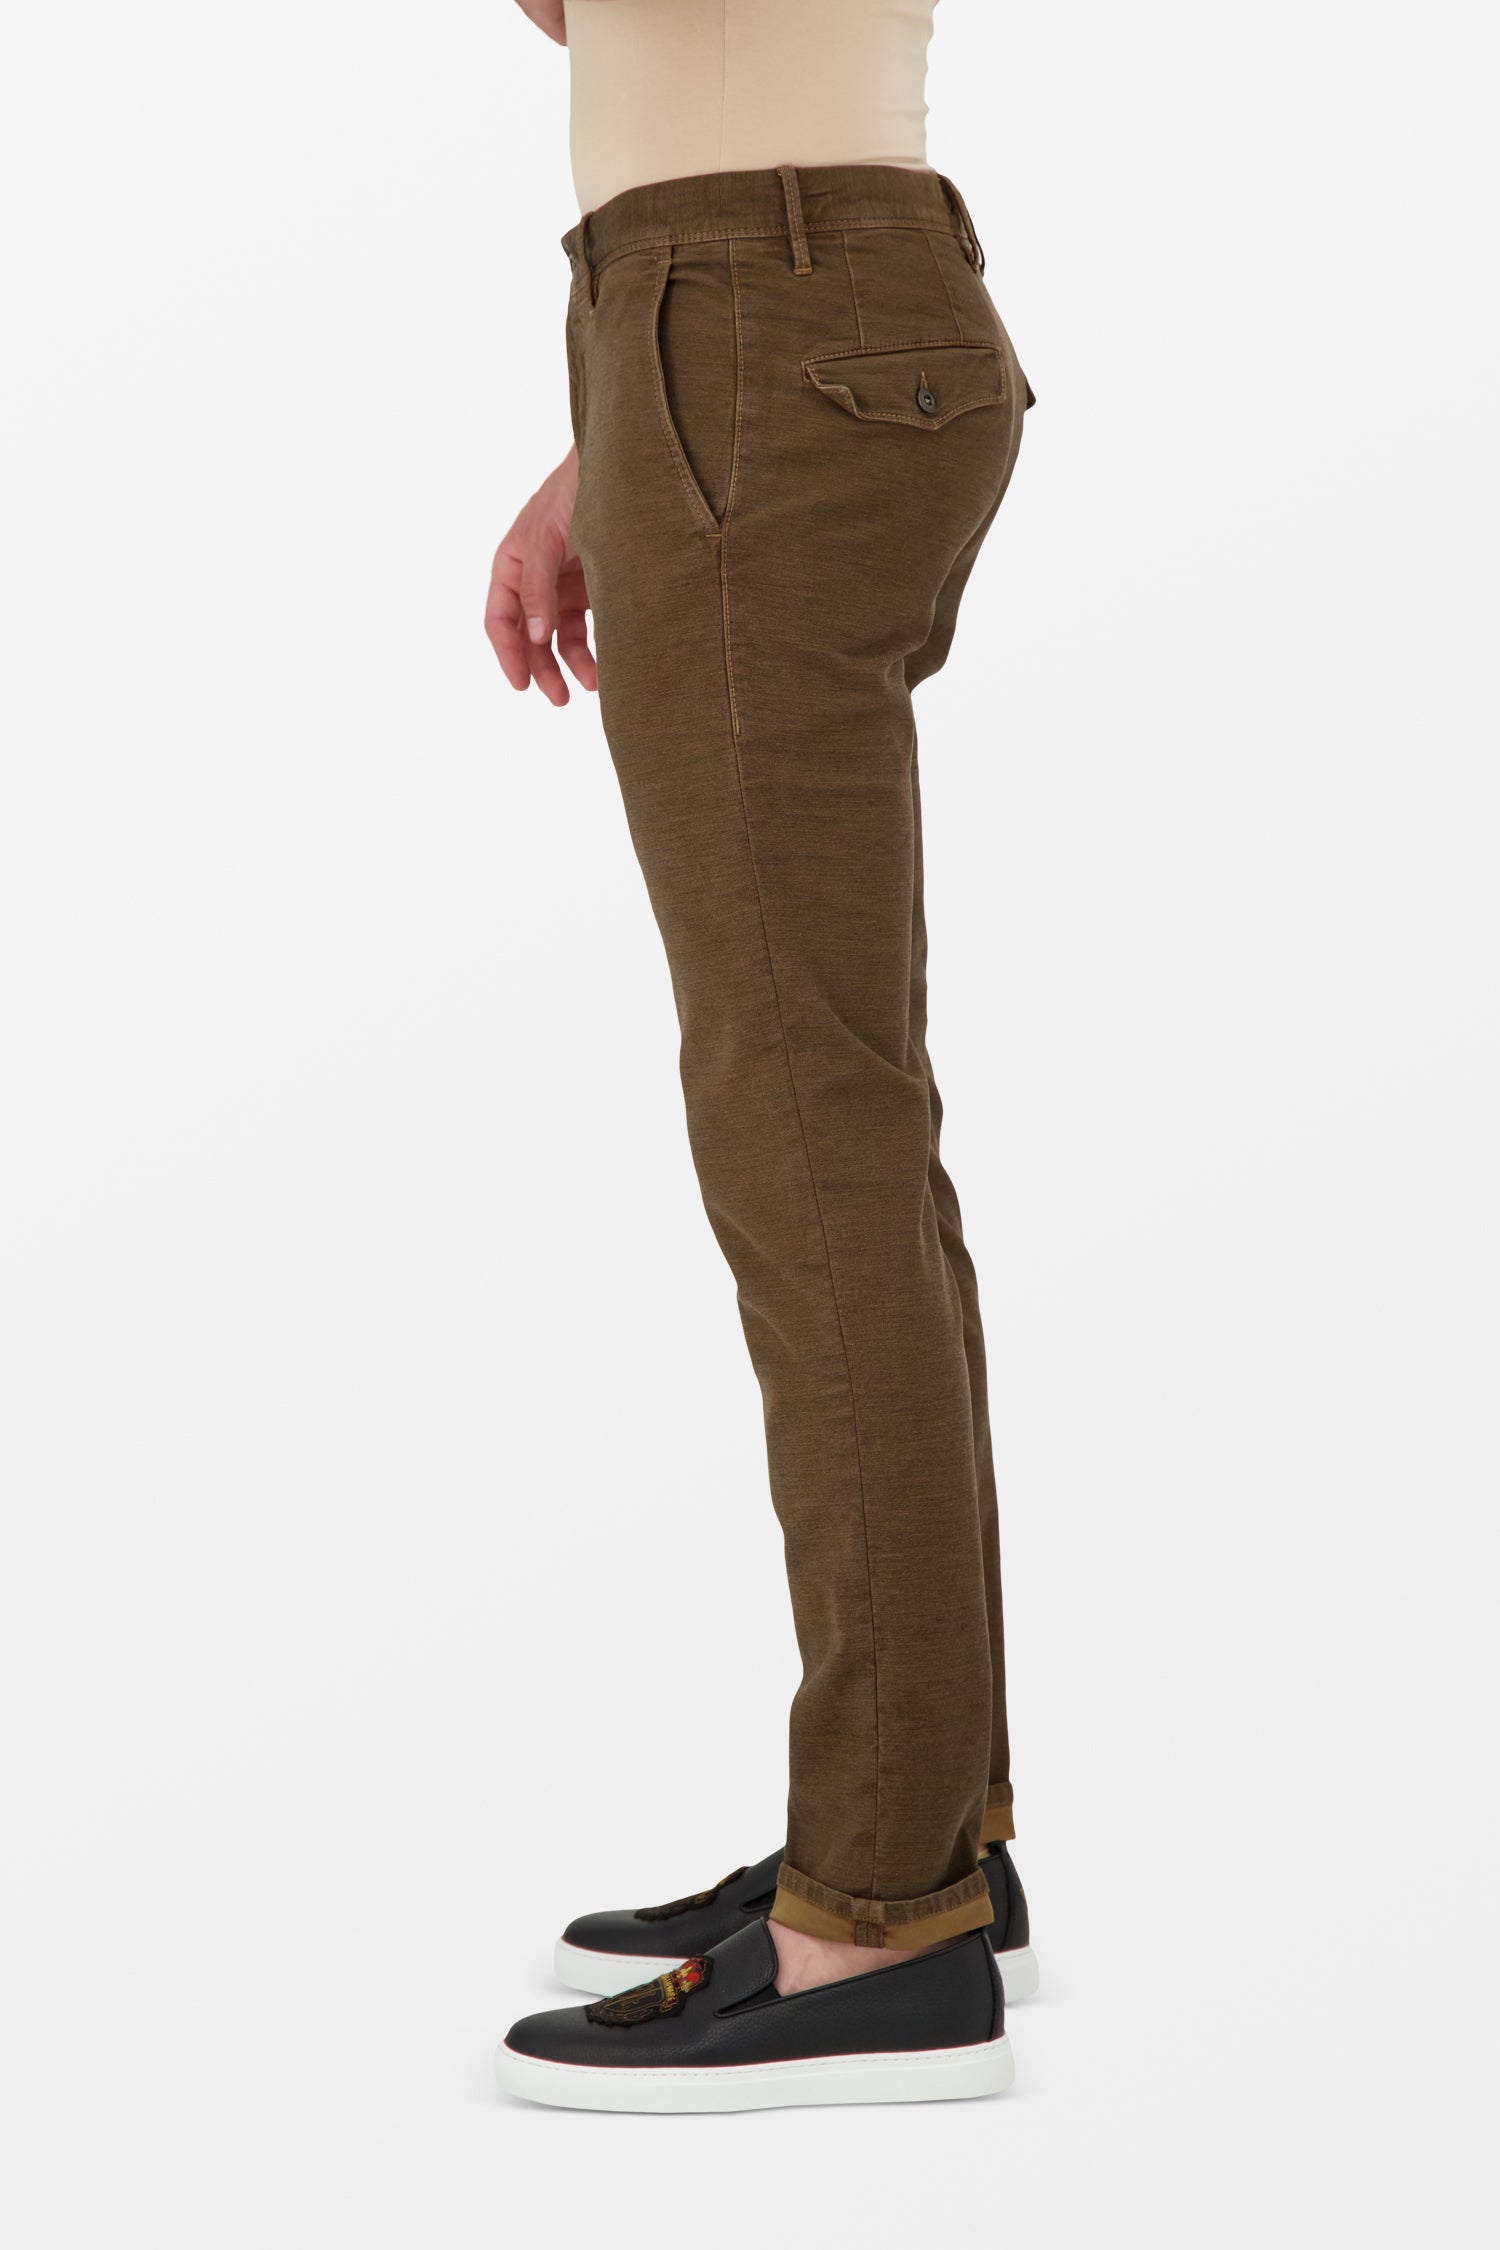 Incotex Brown Trousers